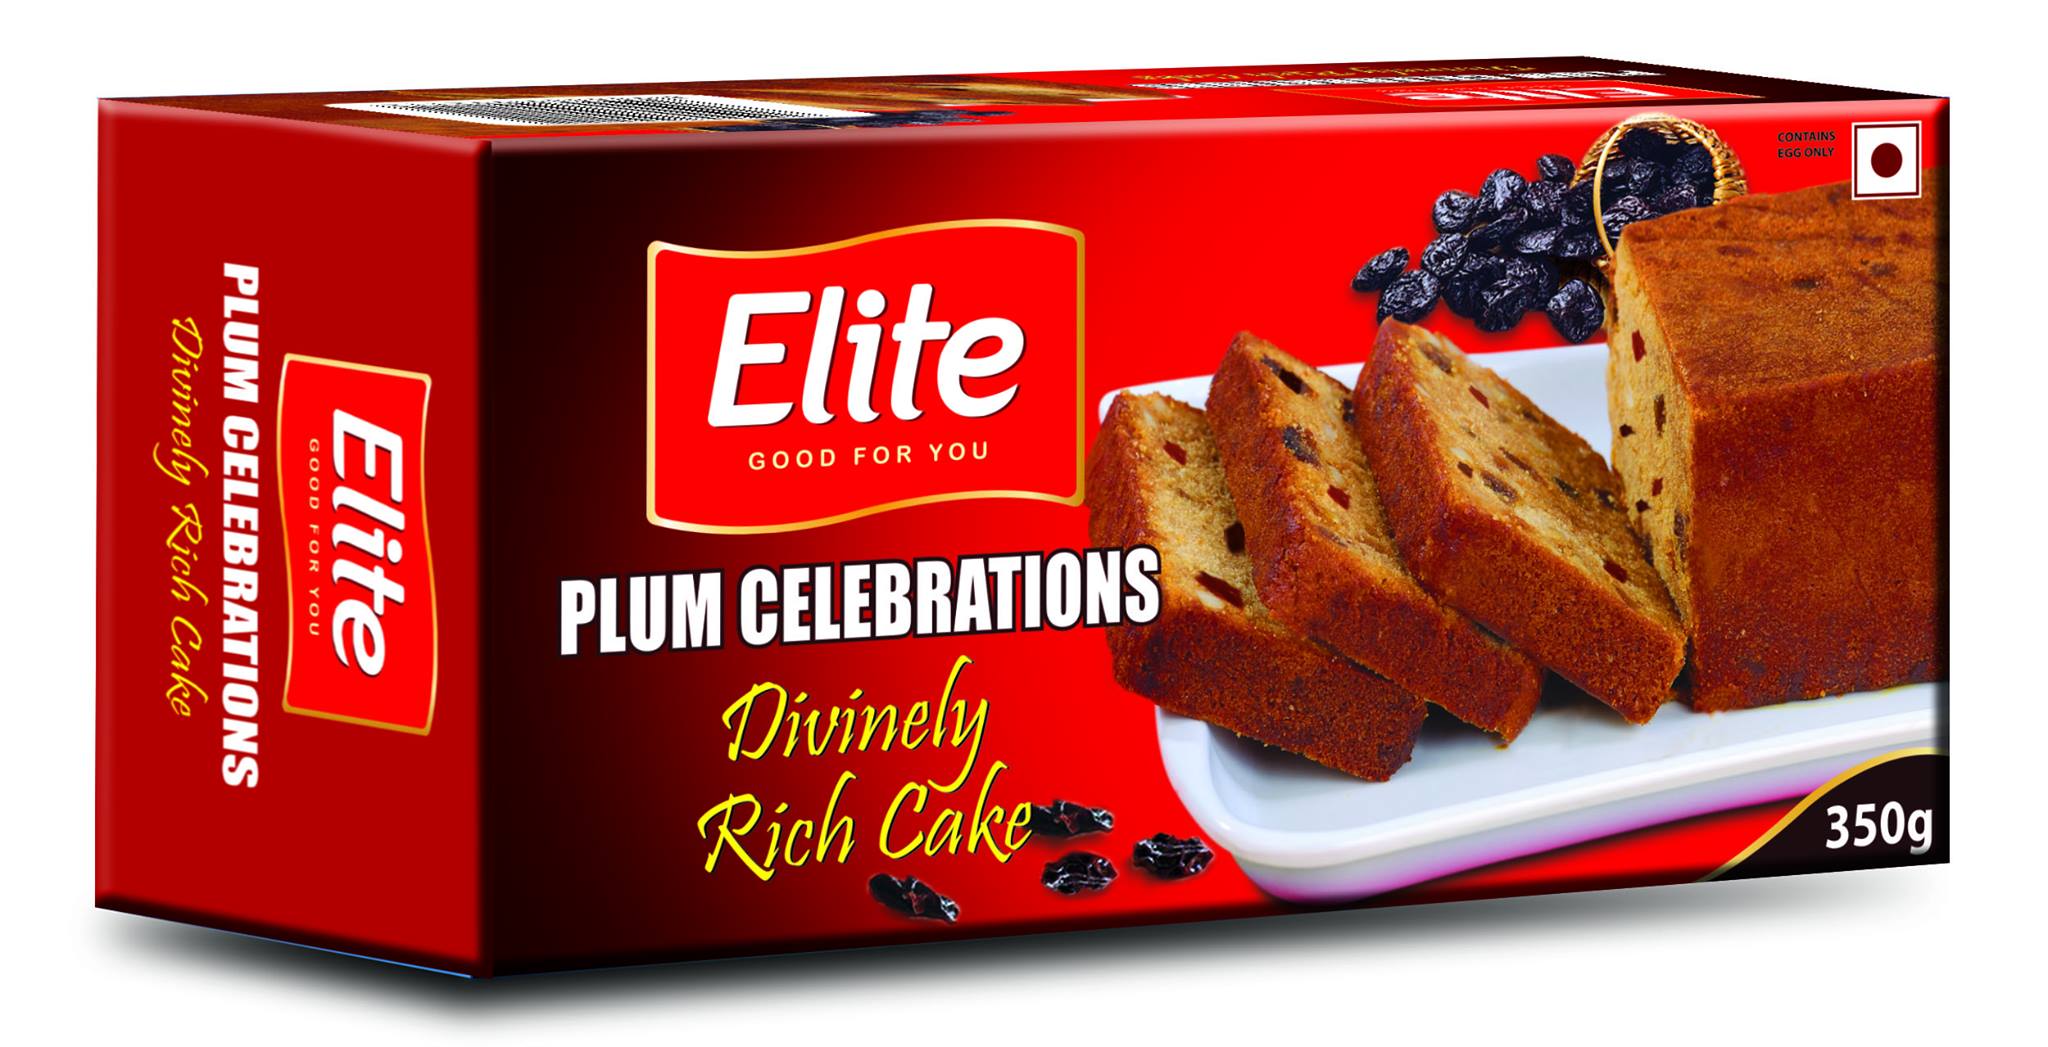 Elite Plum Celebrations in UK sale